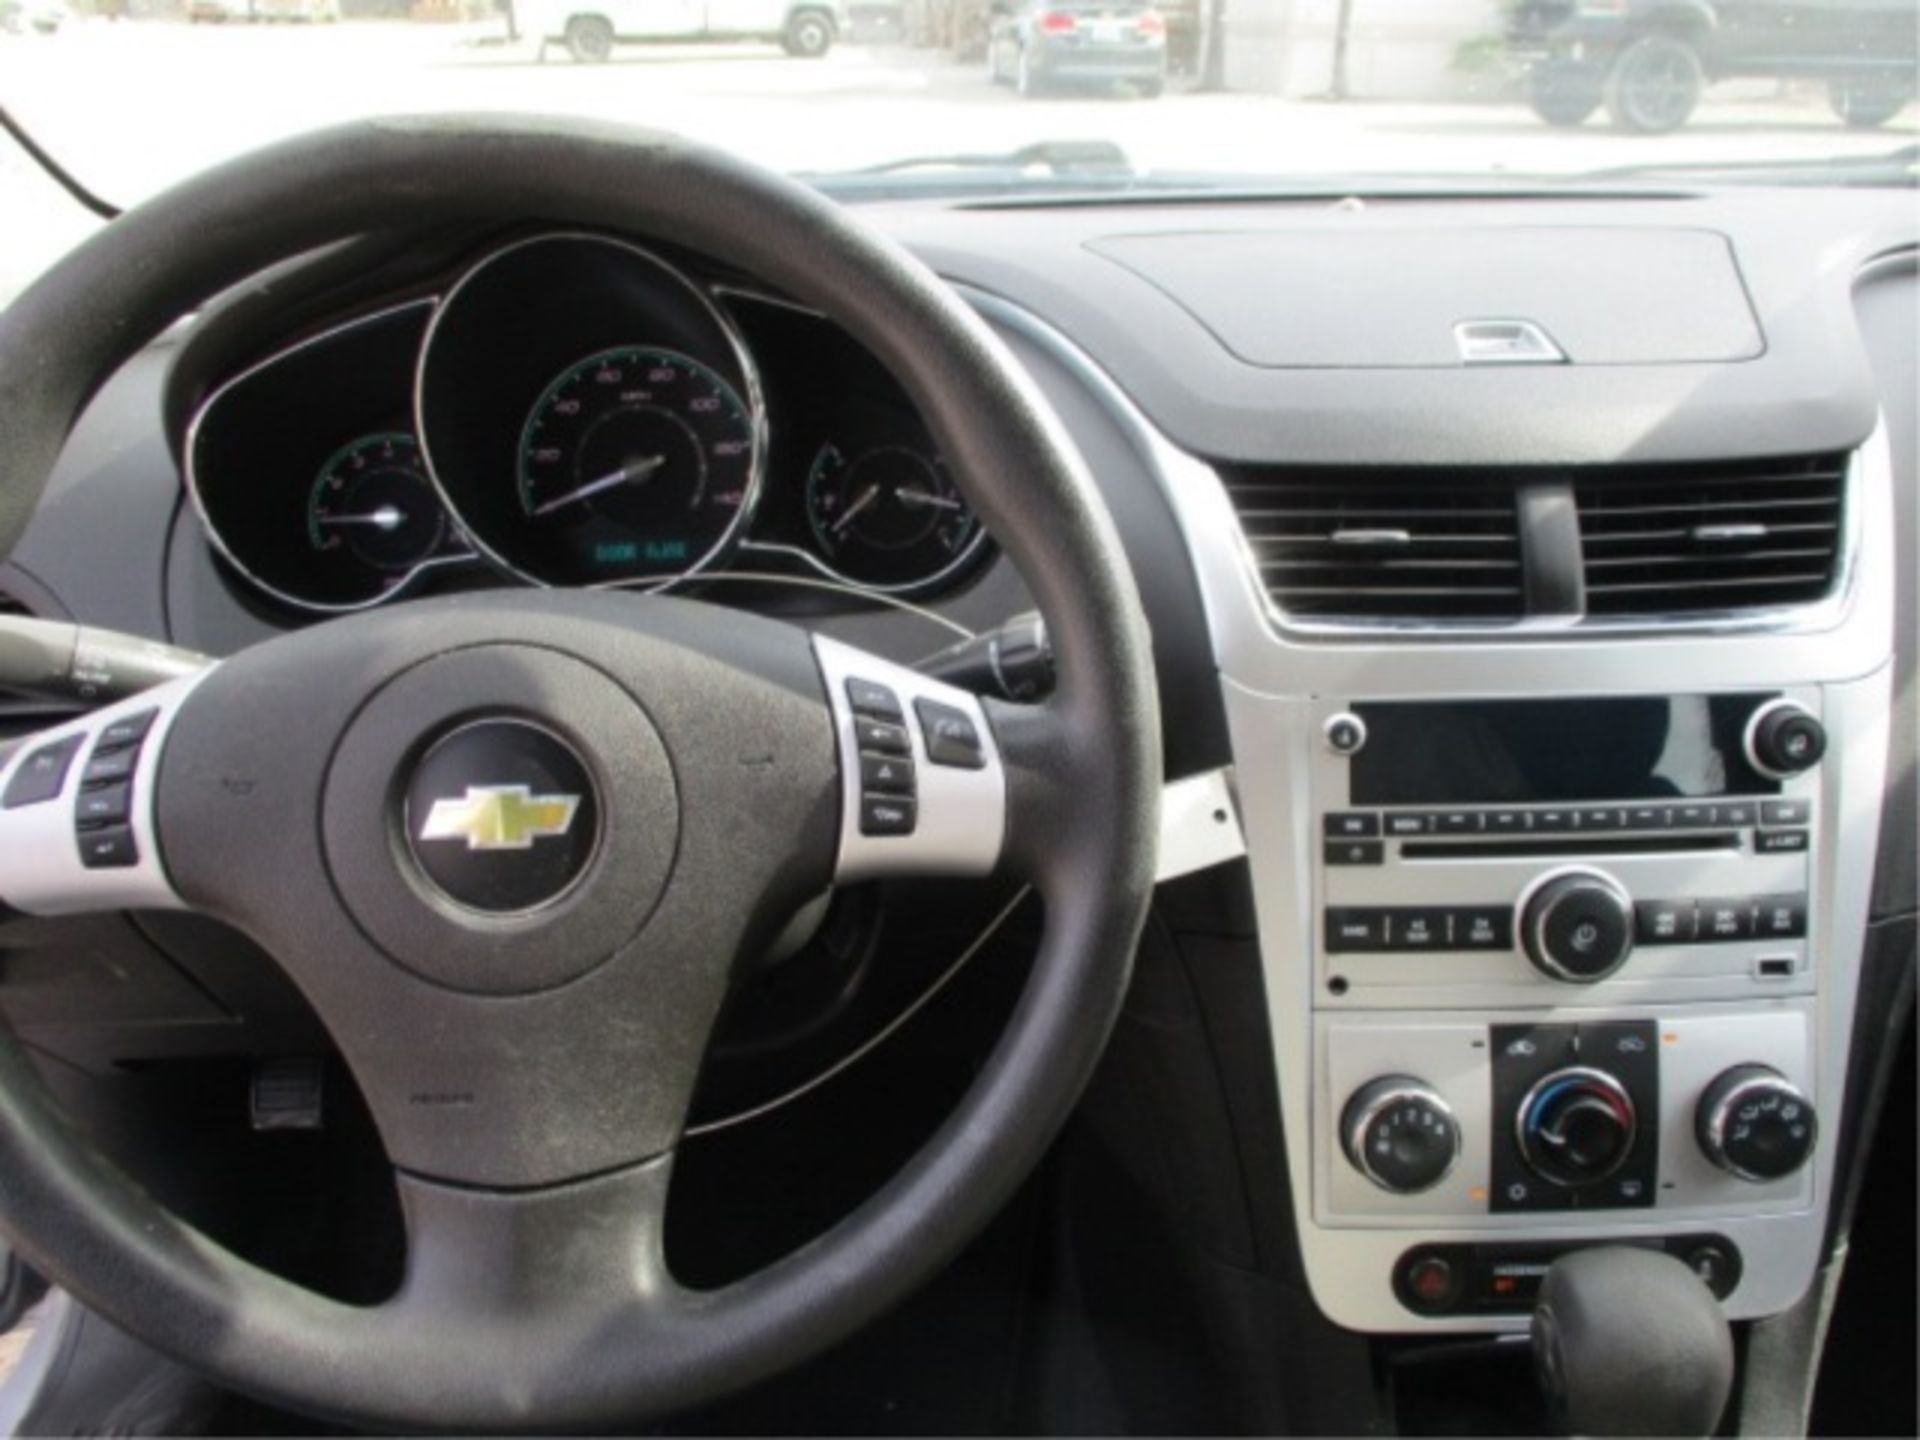 2012 Chevrolet Malibu Sedan, 2.4L Gas, Automatic, S/N: 1G1ZC5E05CF335186, Miles/Hours - 106478 - Image 11 of 16